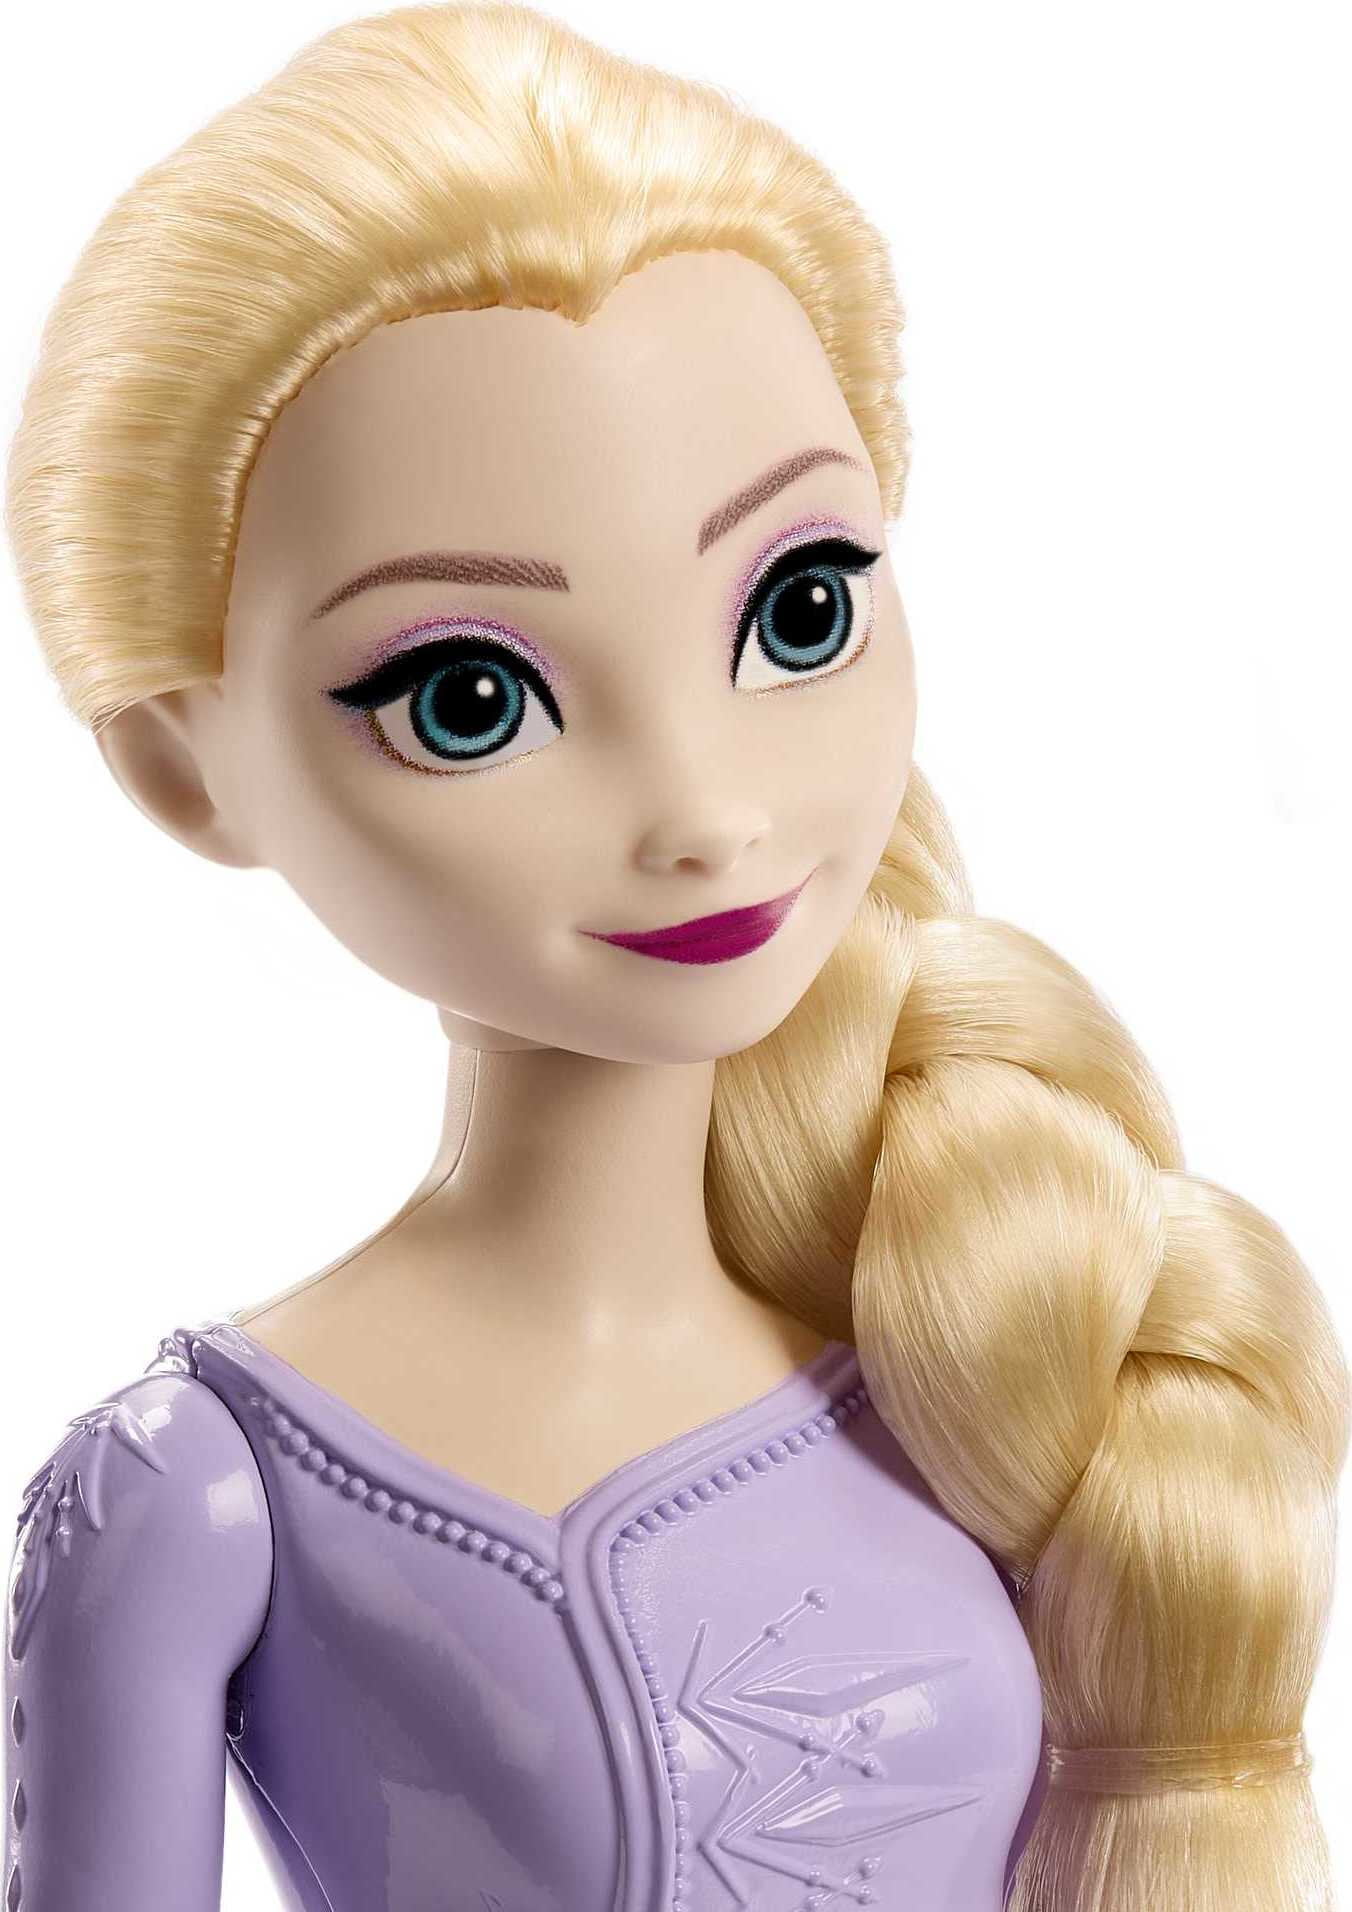 Disney Frozen Arendelle Small Doll, Olaf Snowman Figure & Ice Bear Accessory - Walmart.com